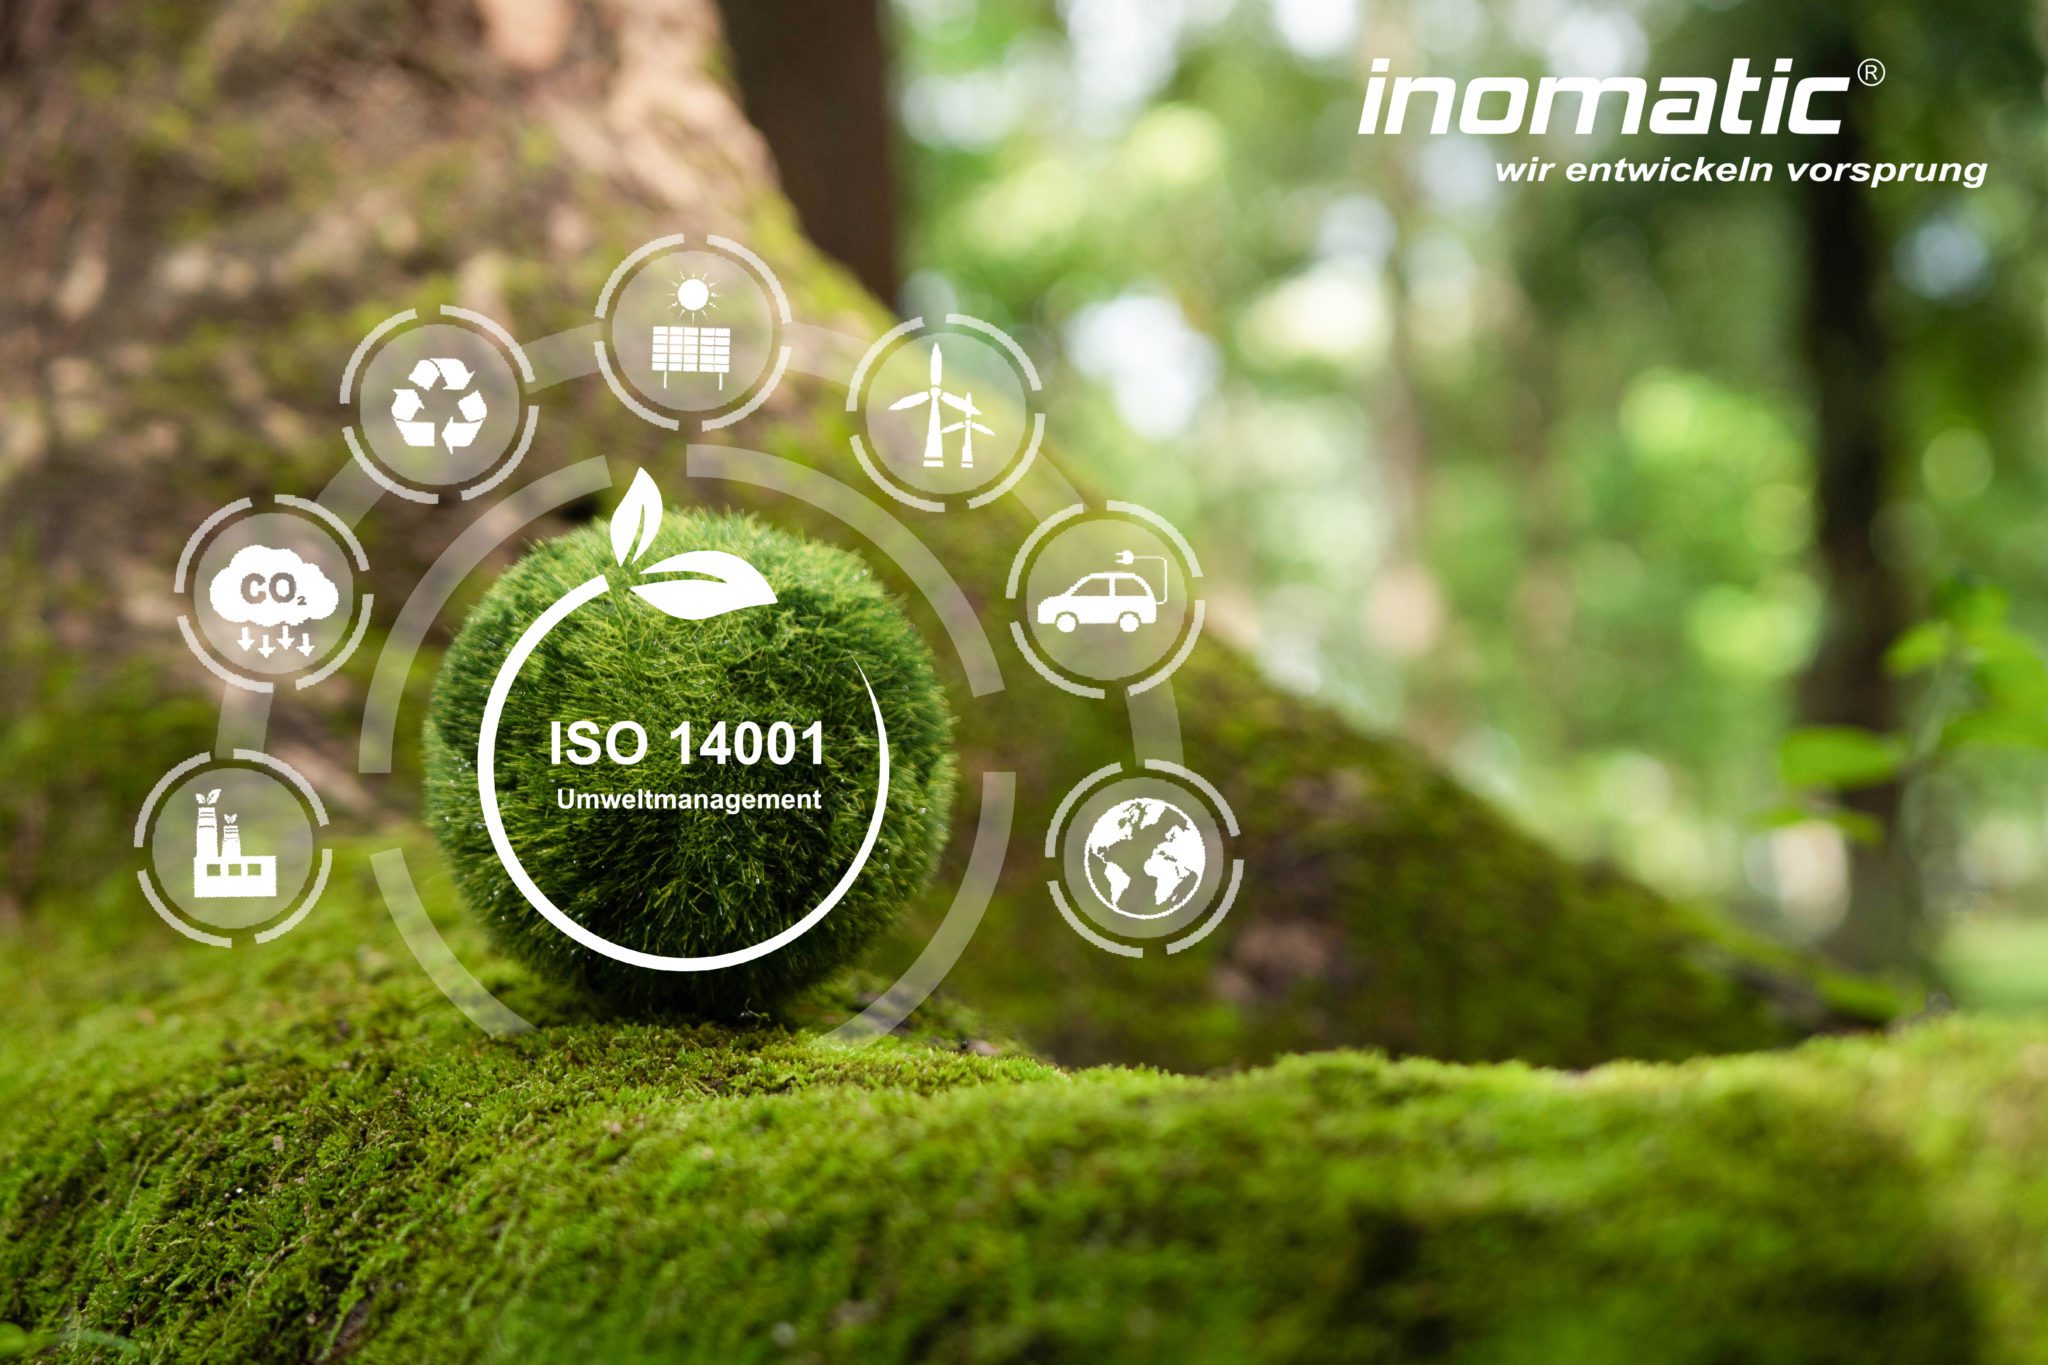 ISO 14001 Umwelt management, inomatic zertifizierung